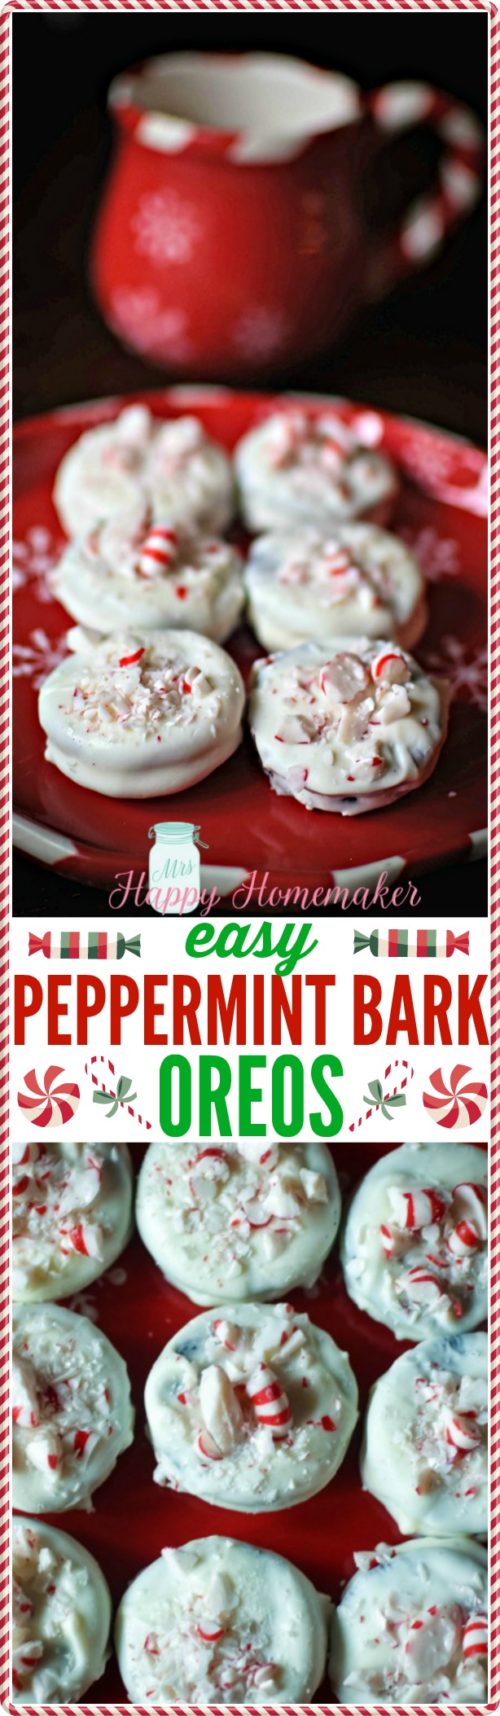 Easy Peppermint Bark Oreos | MrsHappyHomemaker.com